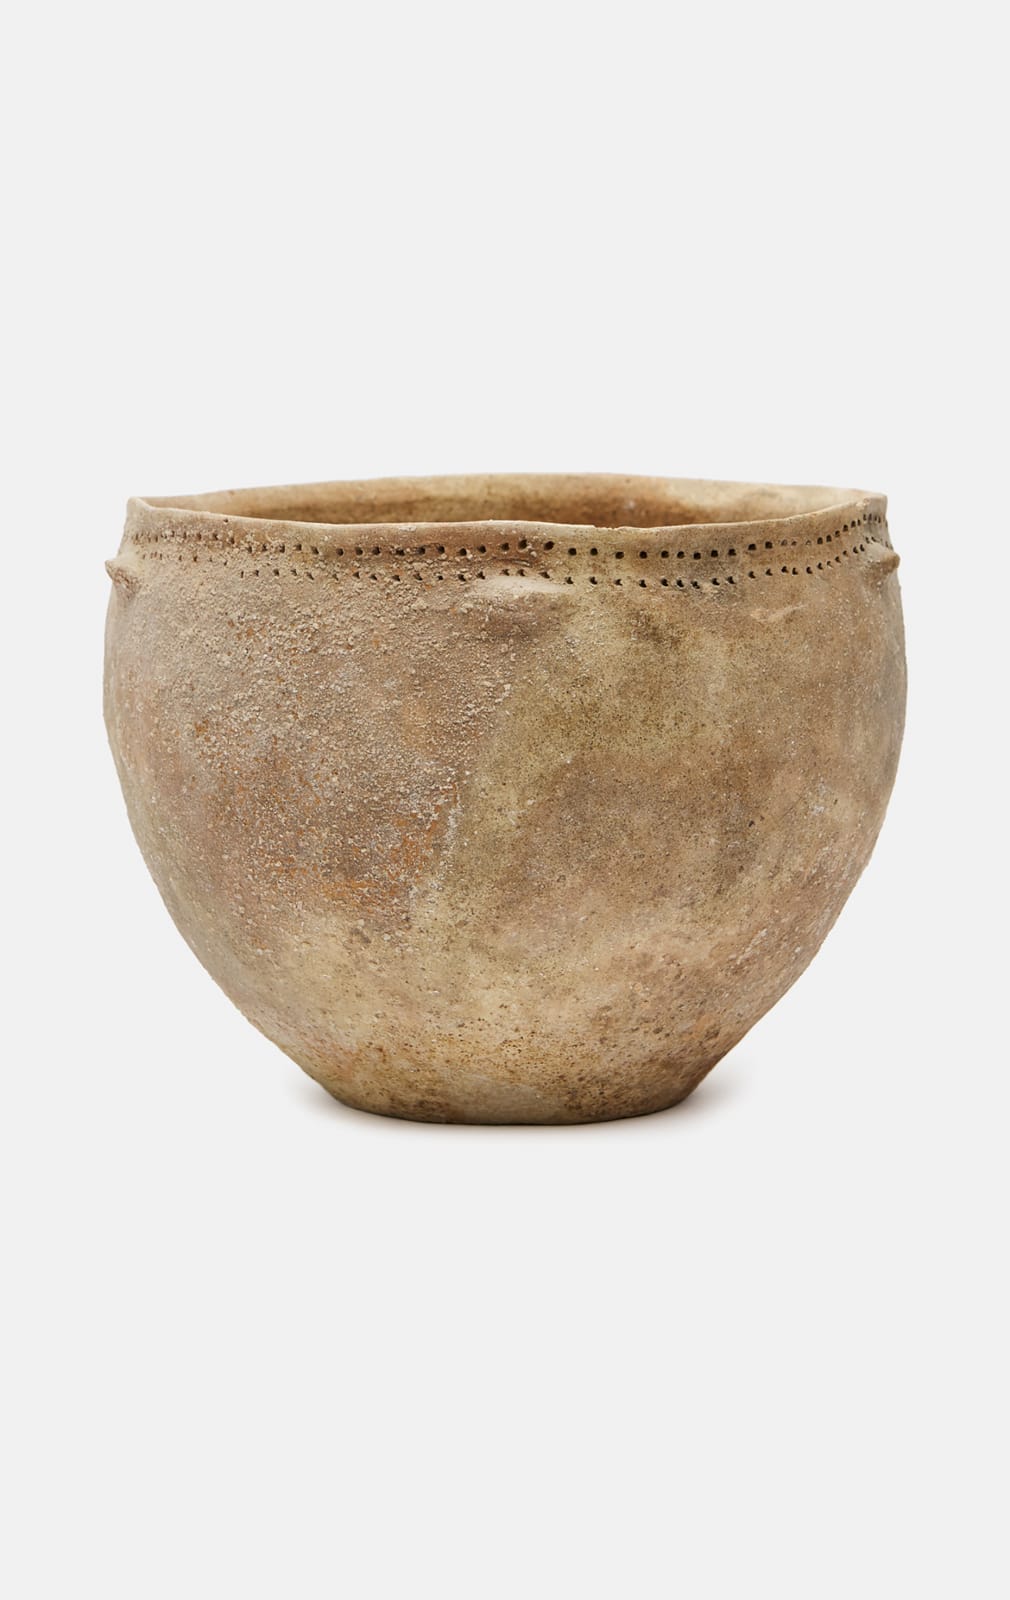 Anon, Bronze Age Earthenware Bowl with Lug Handles